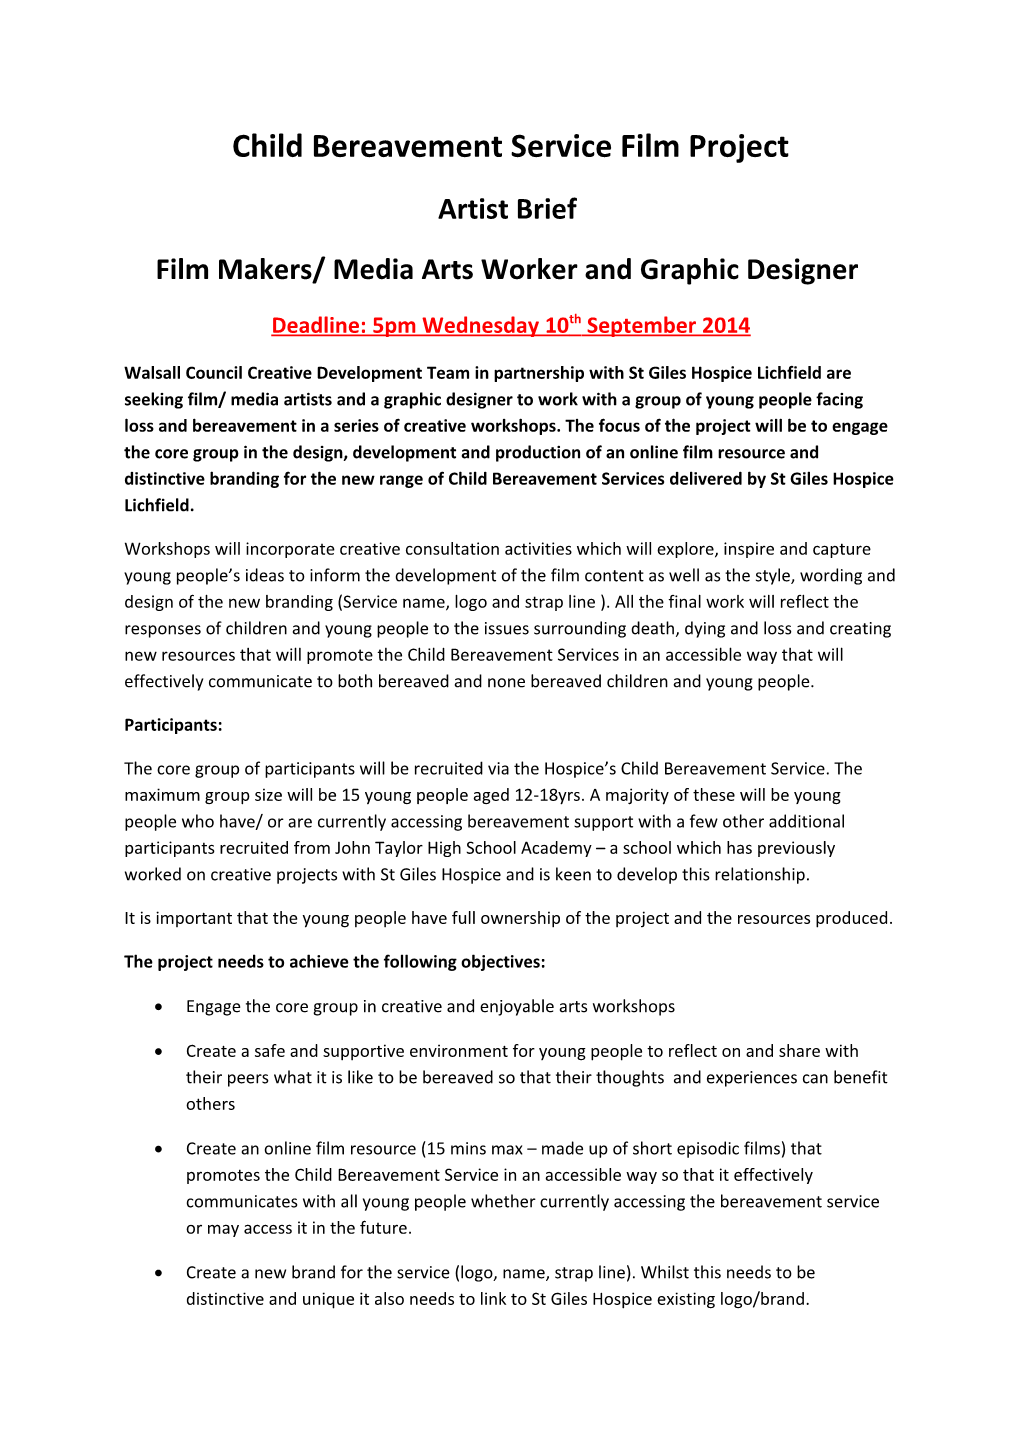 Film Makers/ Media Arts Worker and Graphic Designer